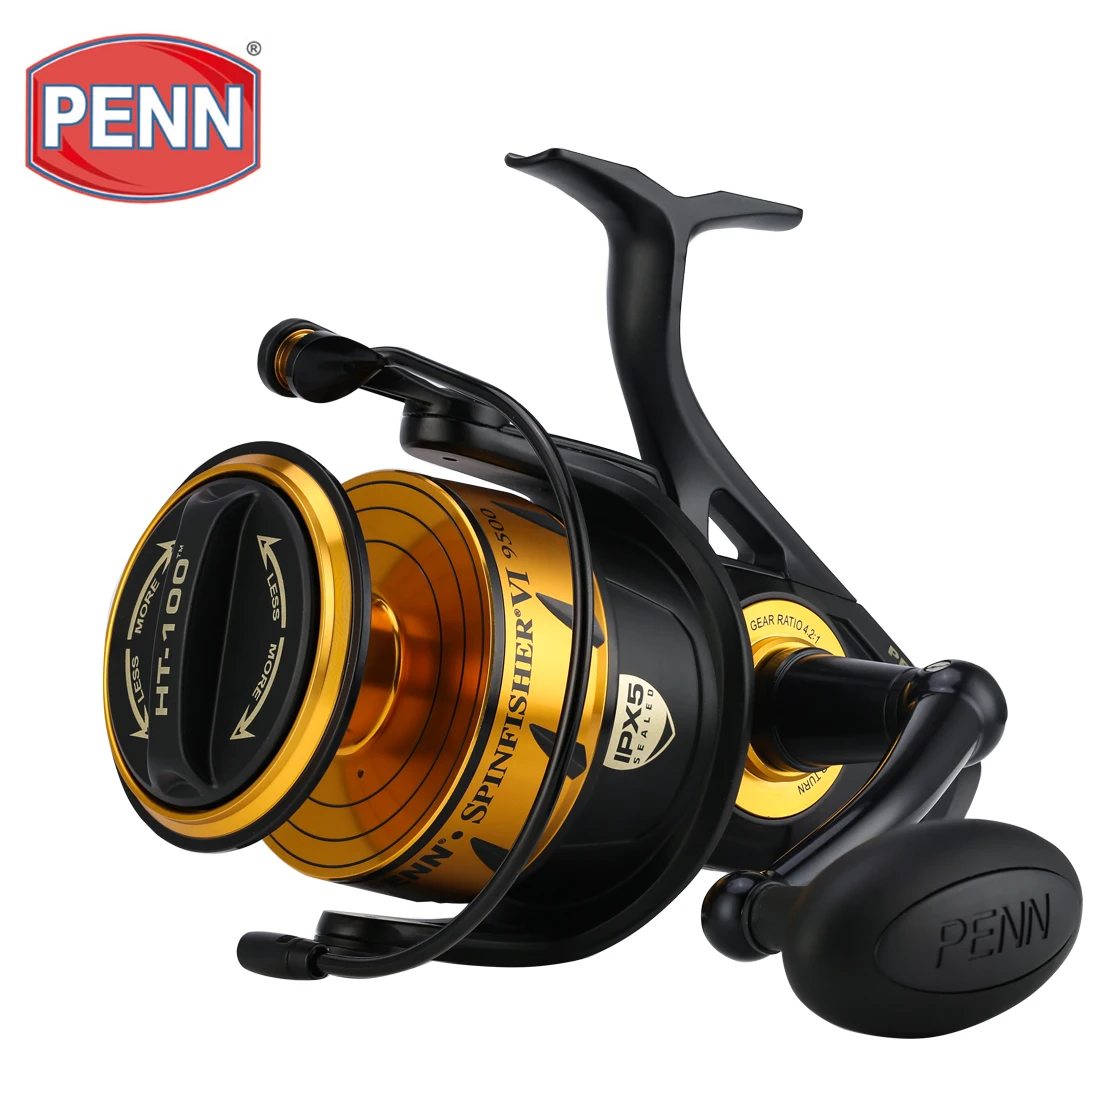 Penn VI Series Spinfisher SSVI 7500